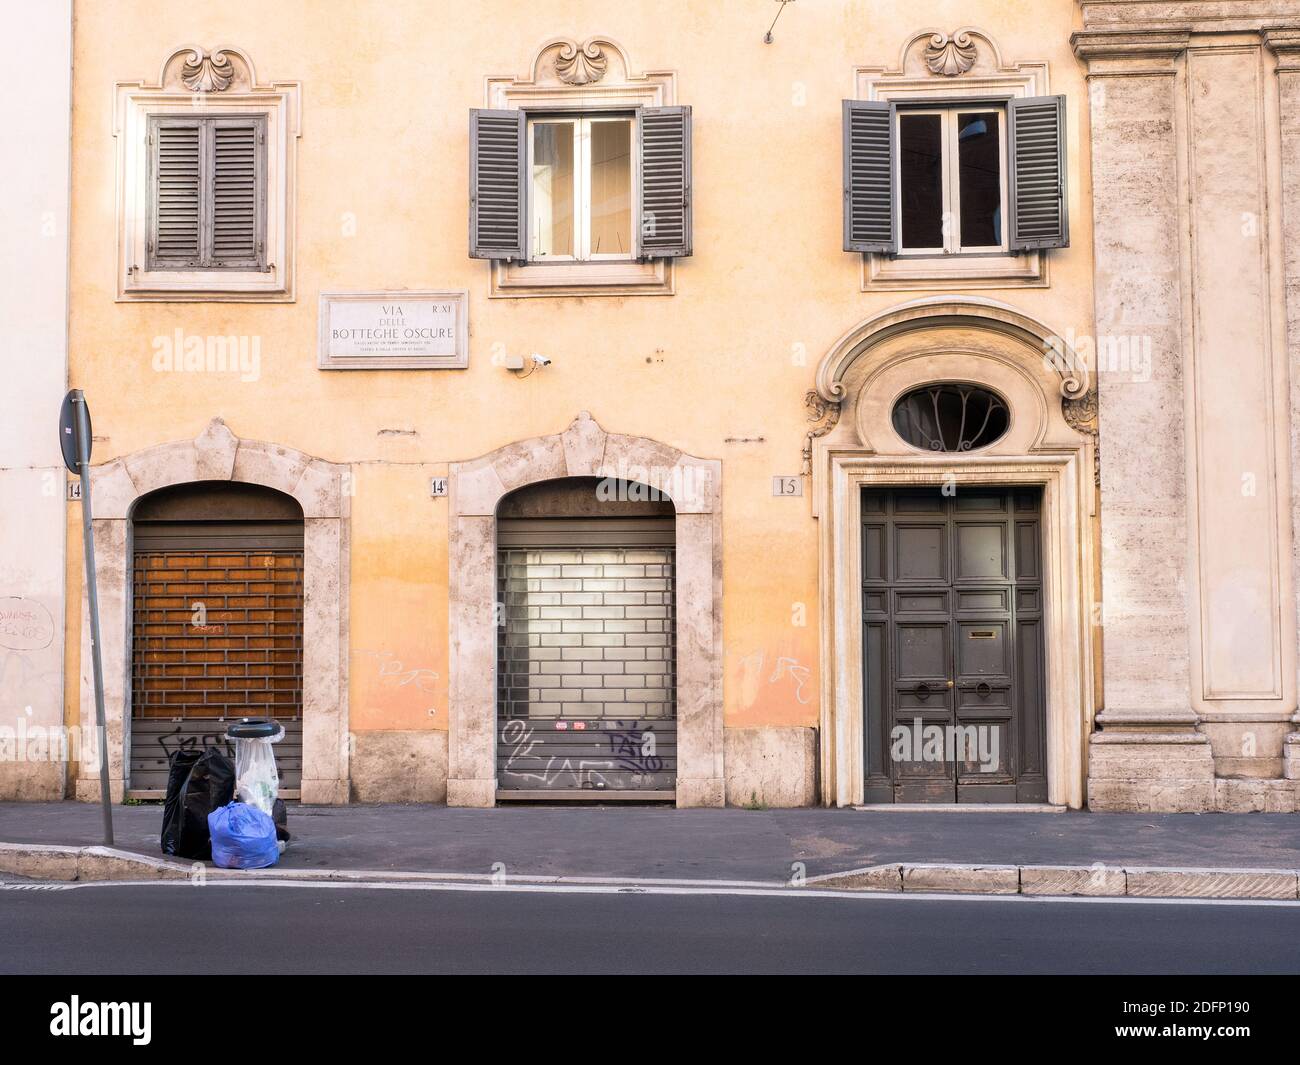 Building facade in via delle Botteghe Oscure - Rome, Italy Stock Photo